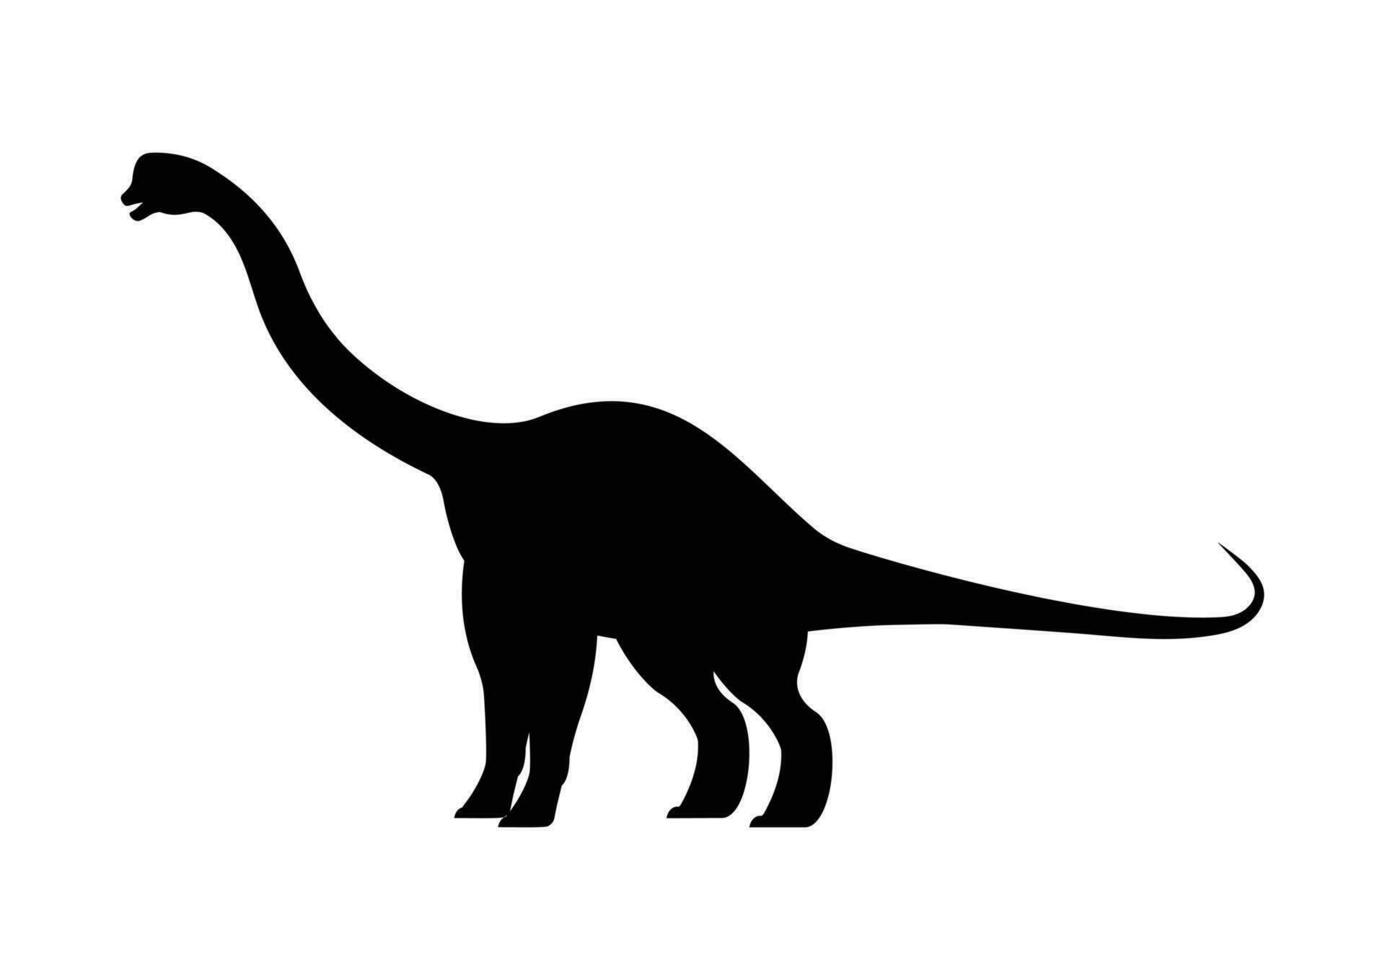 europassauro dinossauro silhueta vetor isolado em branco fundo